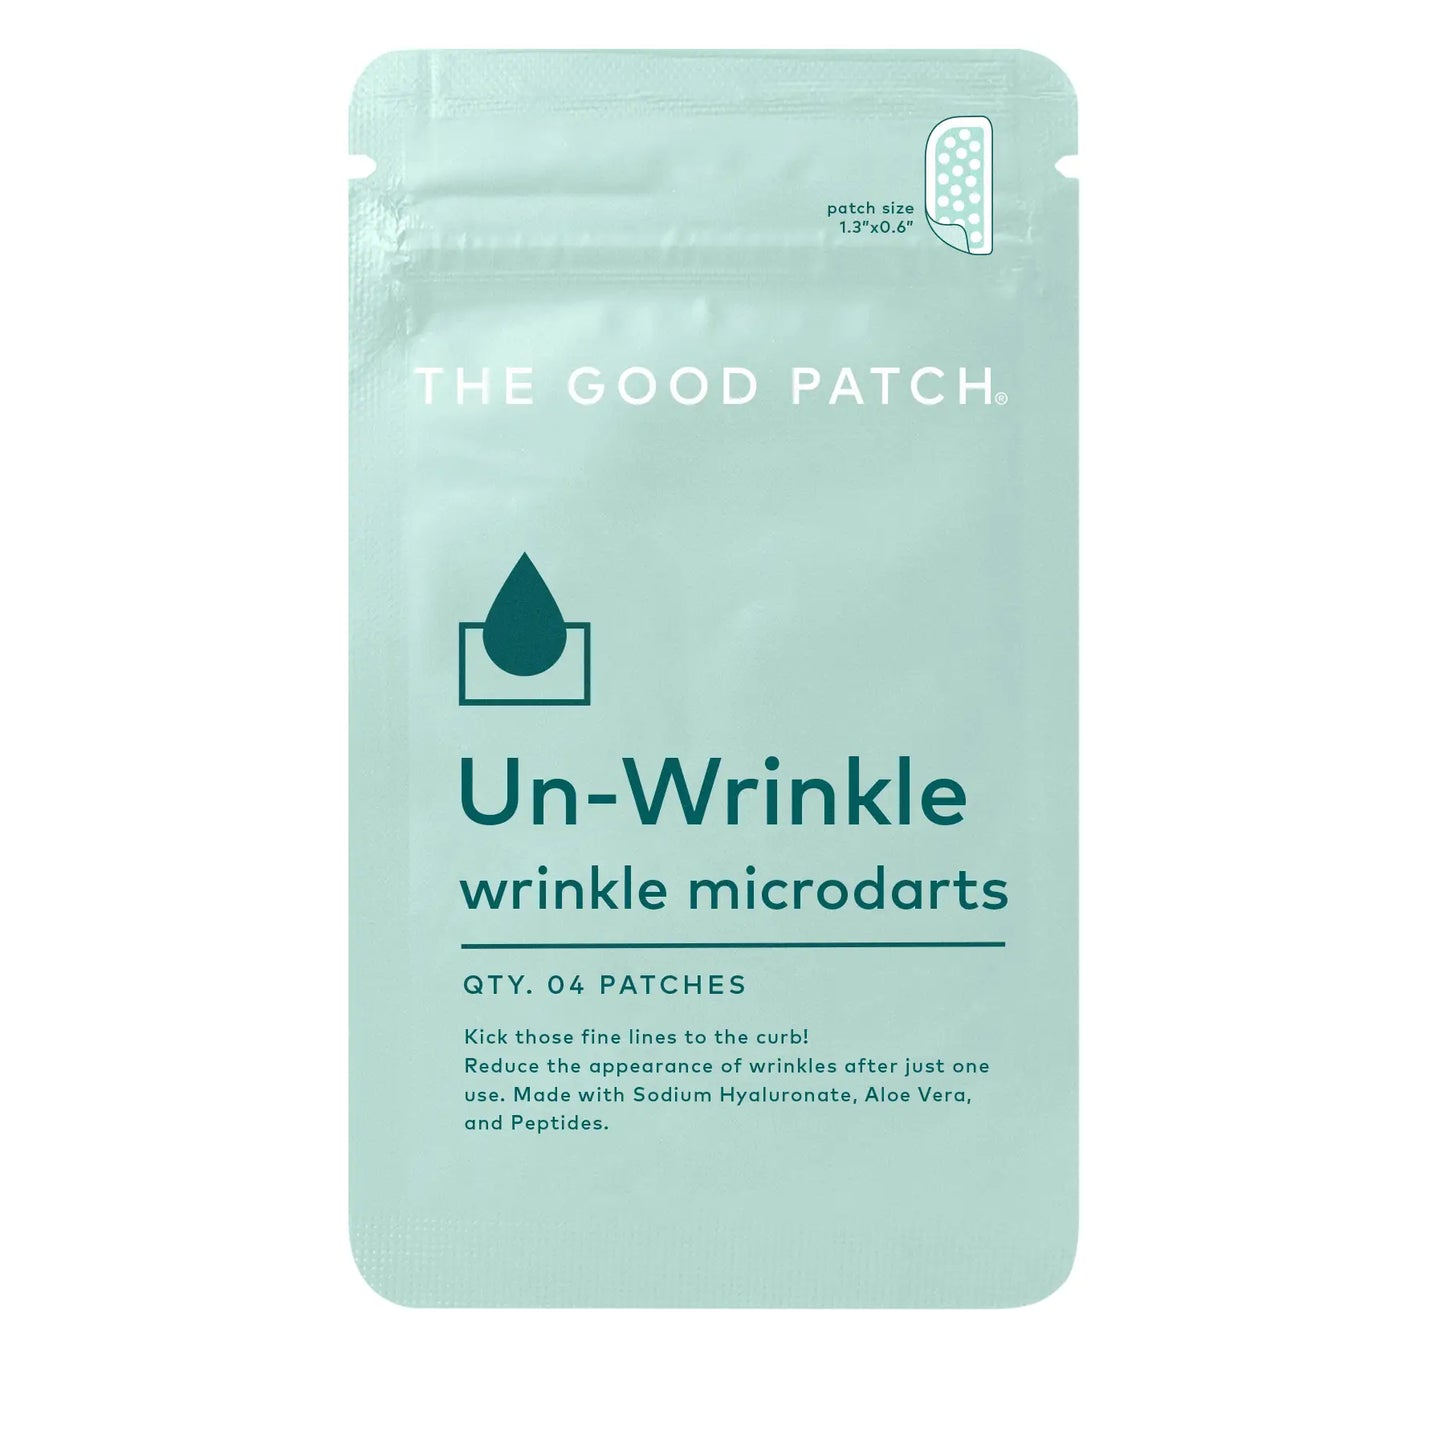 un-wrinkle patches